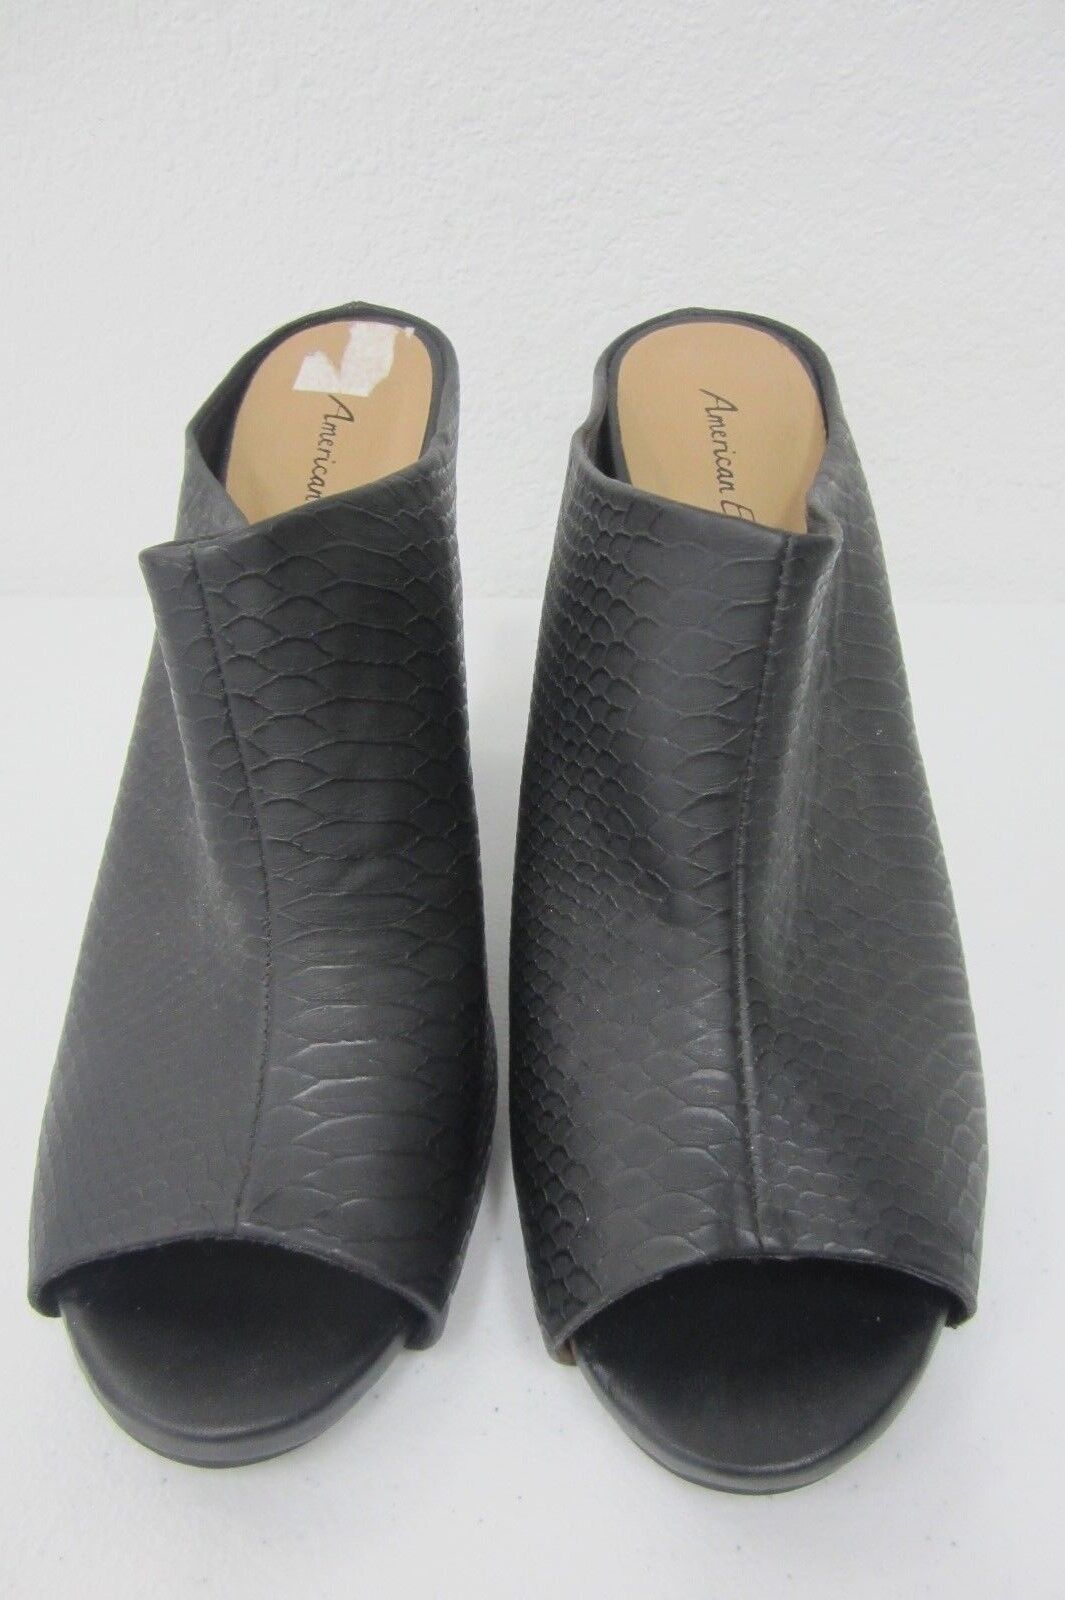 *NEW* American Eagle Women's Block Heel Open Toe Slip On Sandals Shoes Size 11